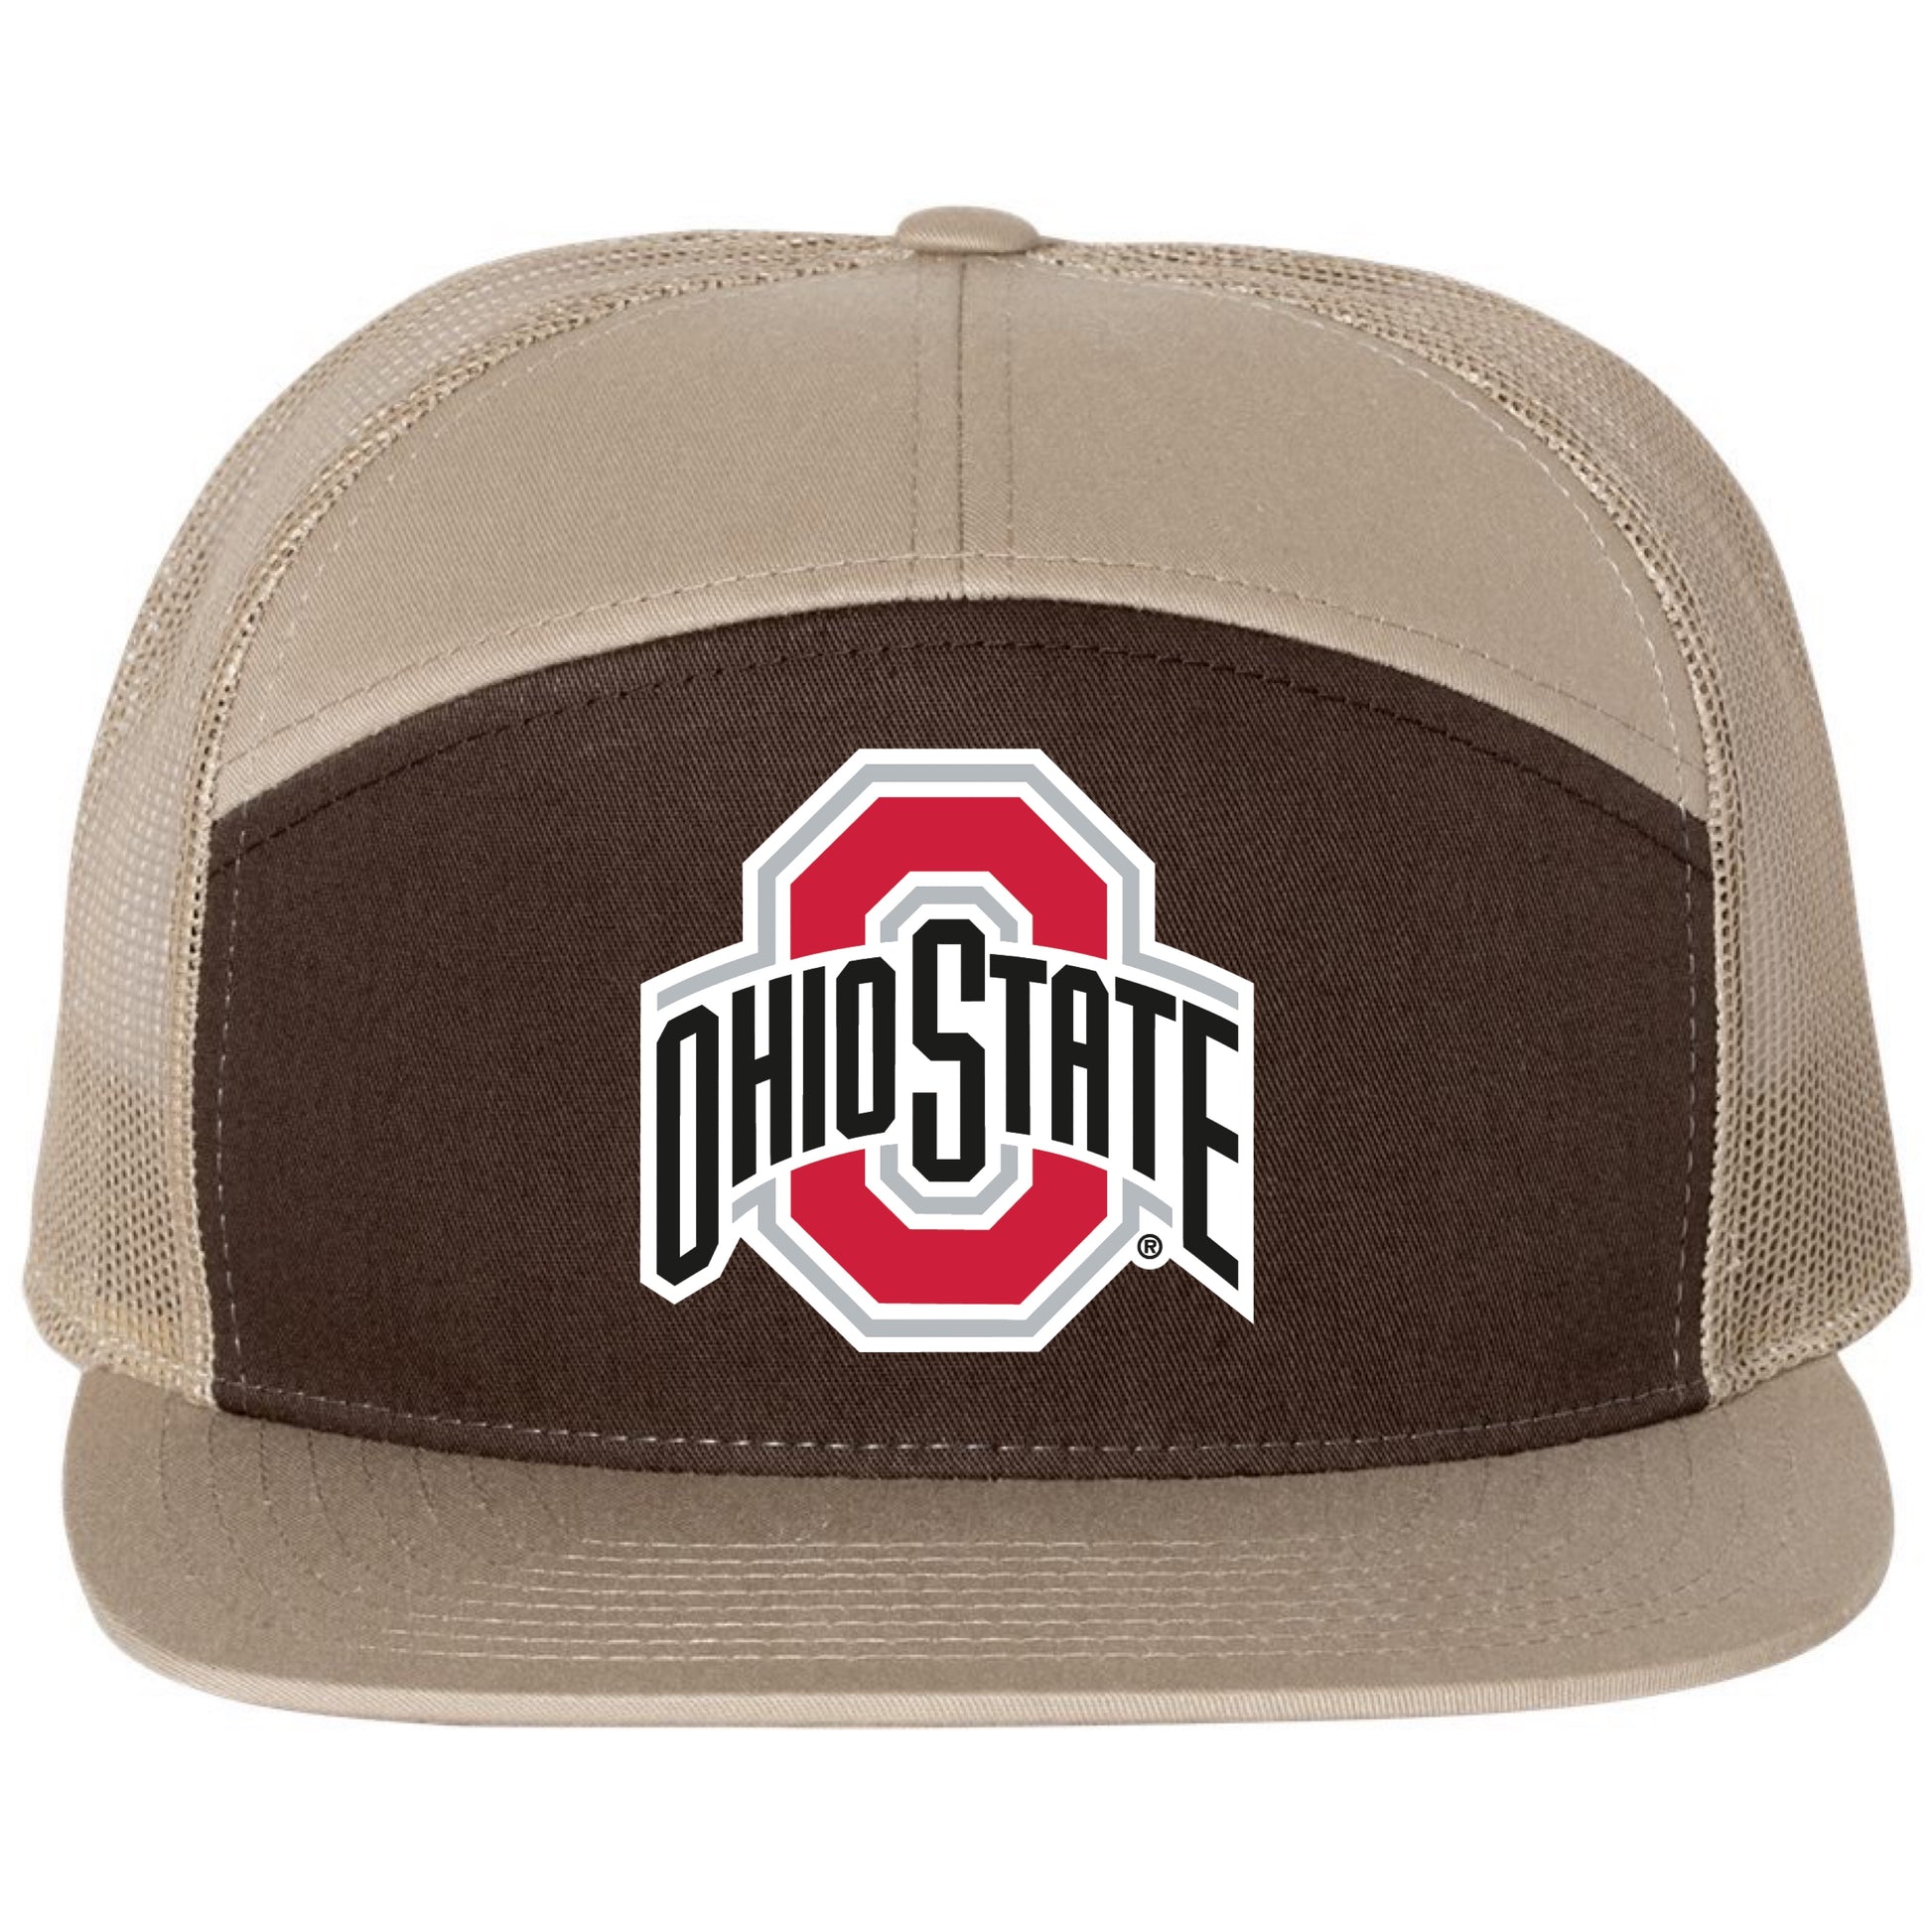 Ohio State Buckeyes 3D Snapback Seven-Panel Trucker Hat- Brown/ Khaki - Ten Gallon Hat Co.